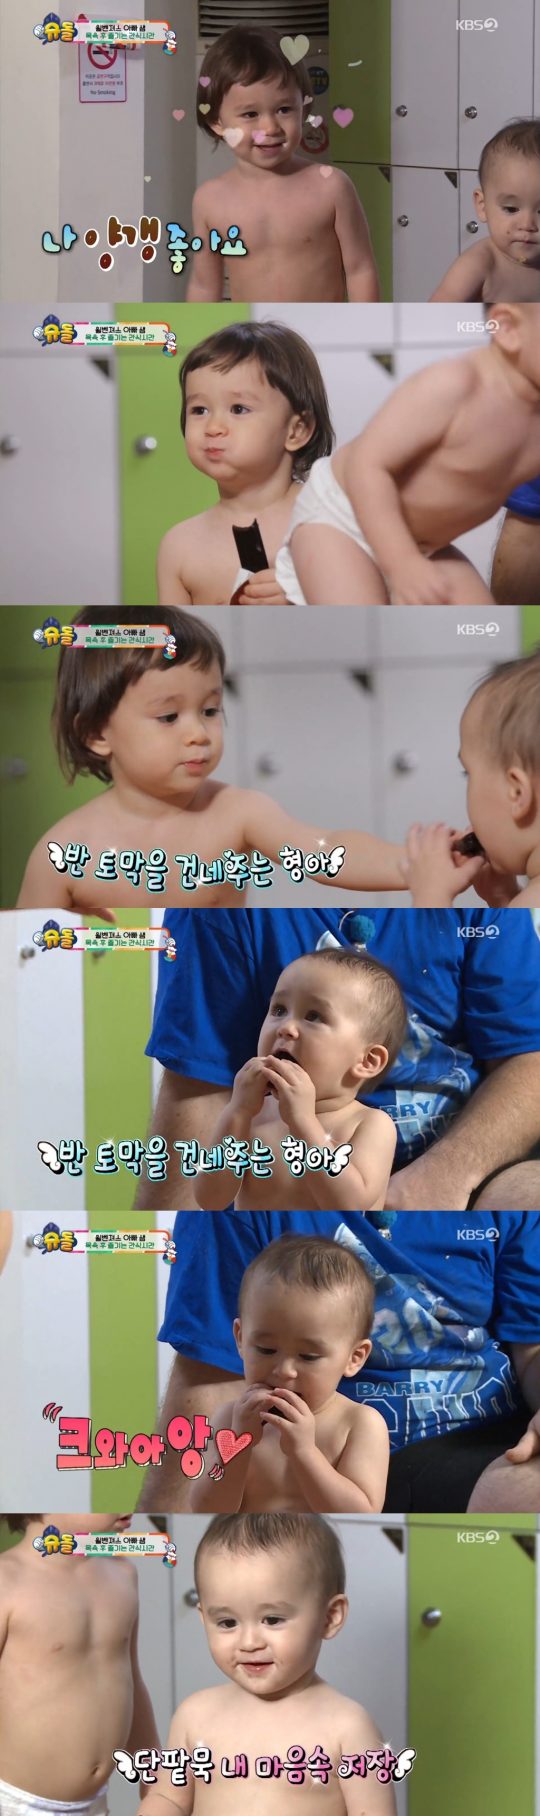 KBS2 ‘슈퍼맨이 돌아왔다’ 방송 화면